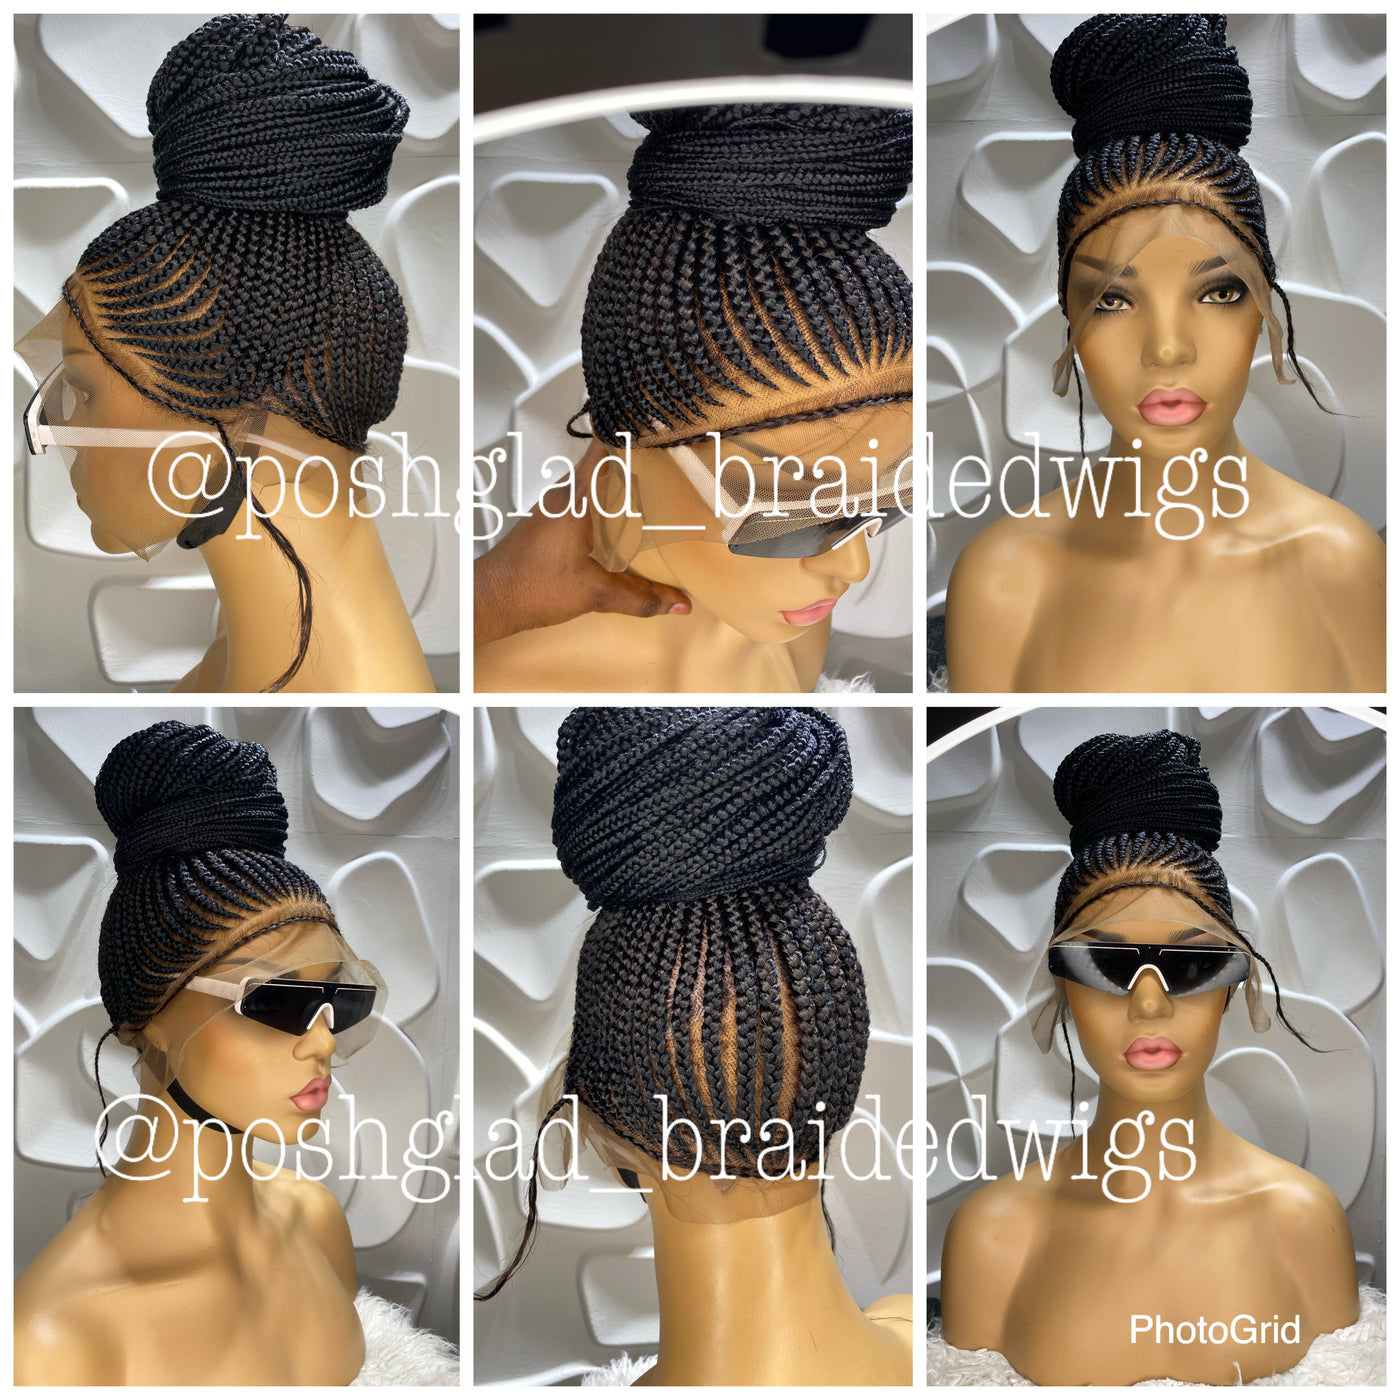 Cornrow Braid Wig (13x6 Lace Frontal) - Cele Poshglad Braided Wigs Cornrow Braid Wig